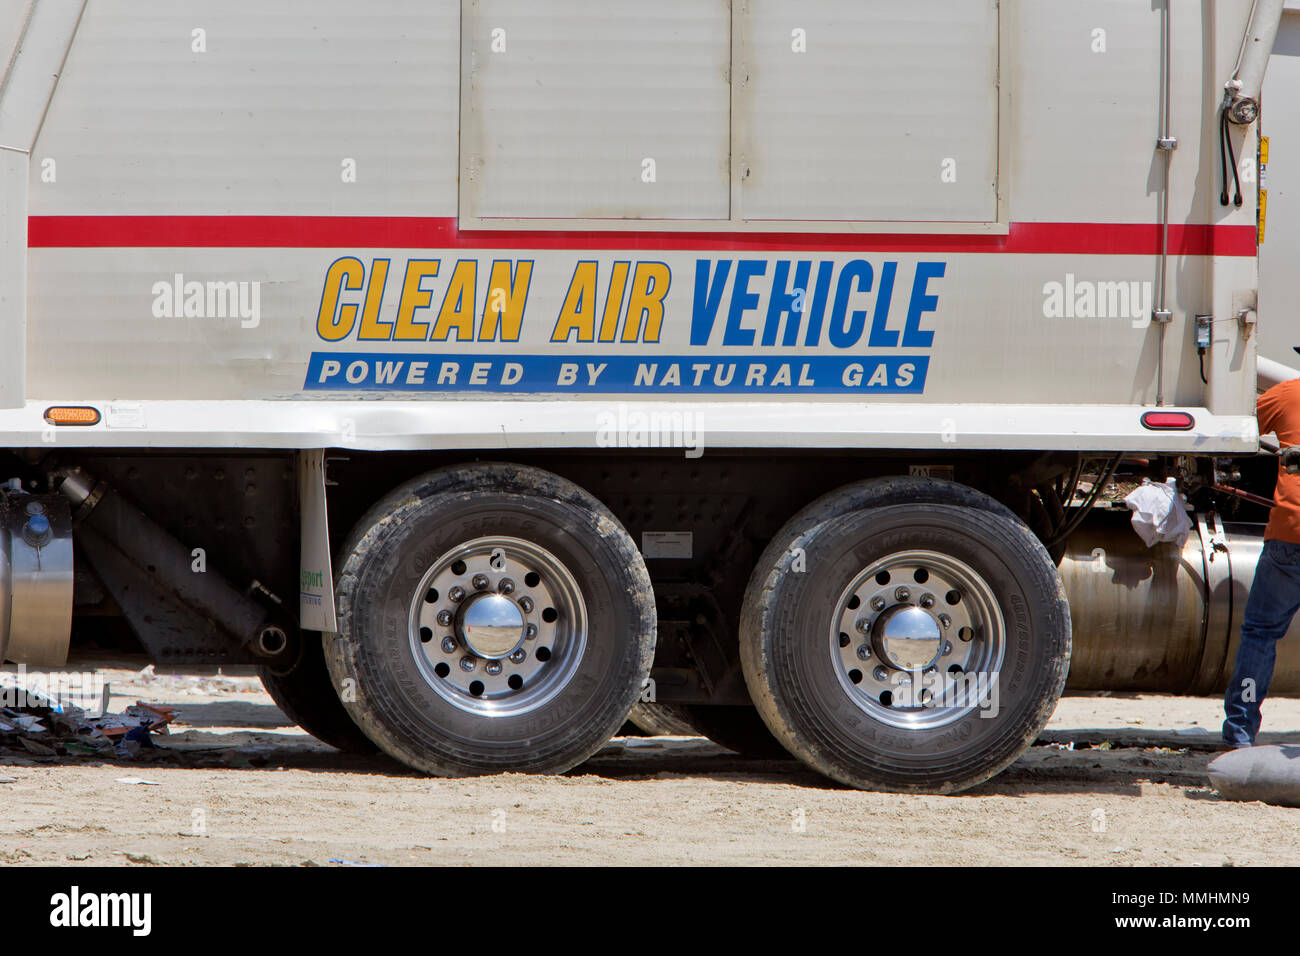 "Clean Air Vehicle" - "Powered by Natural gas", veicolo che trasporta rifiuti in discarica sanitaria locale. Foto Stock